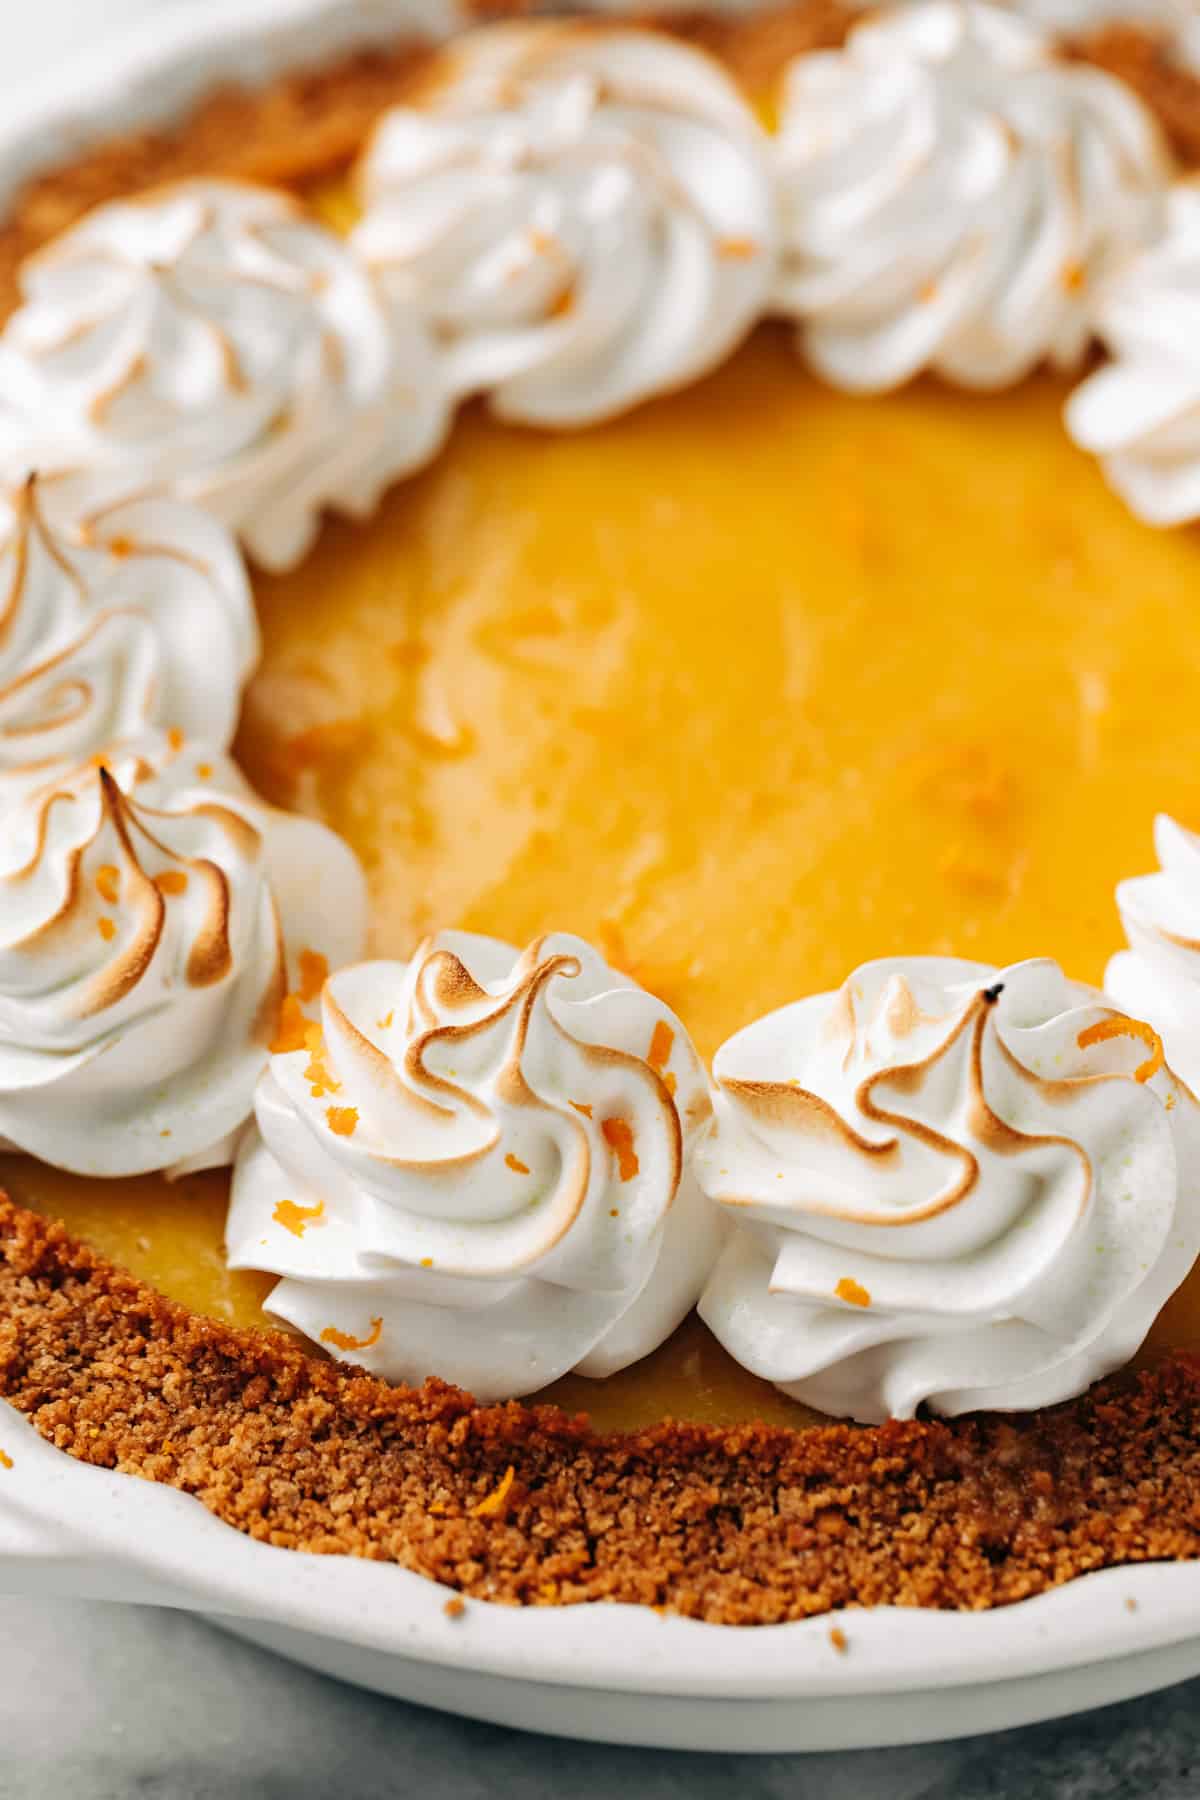 toasted meringue on top of an orange pie.